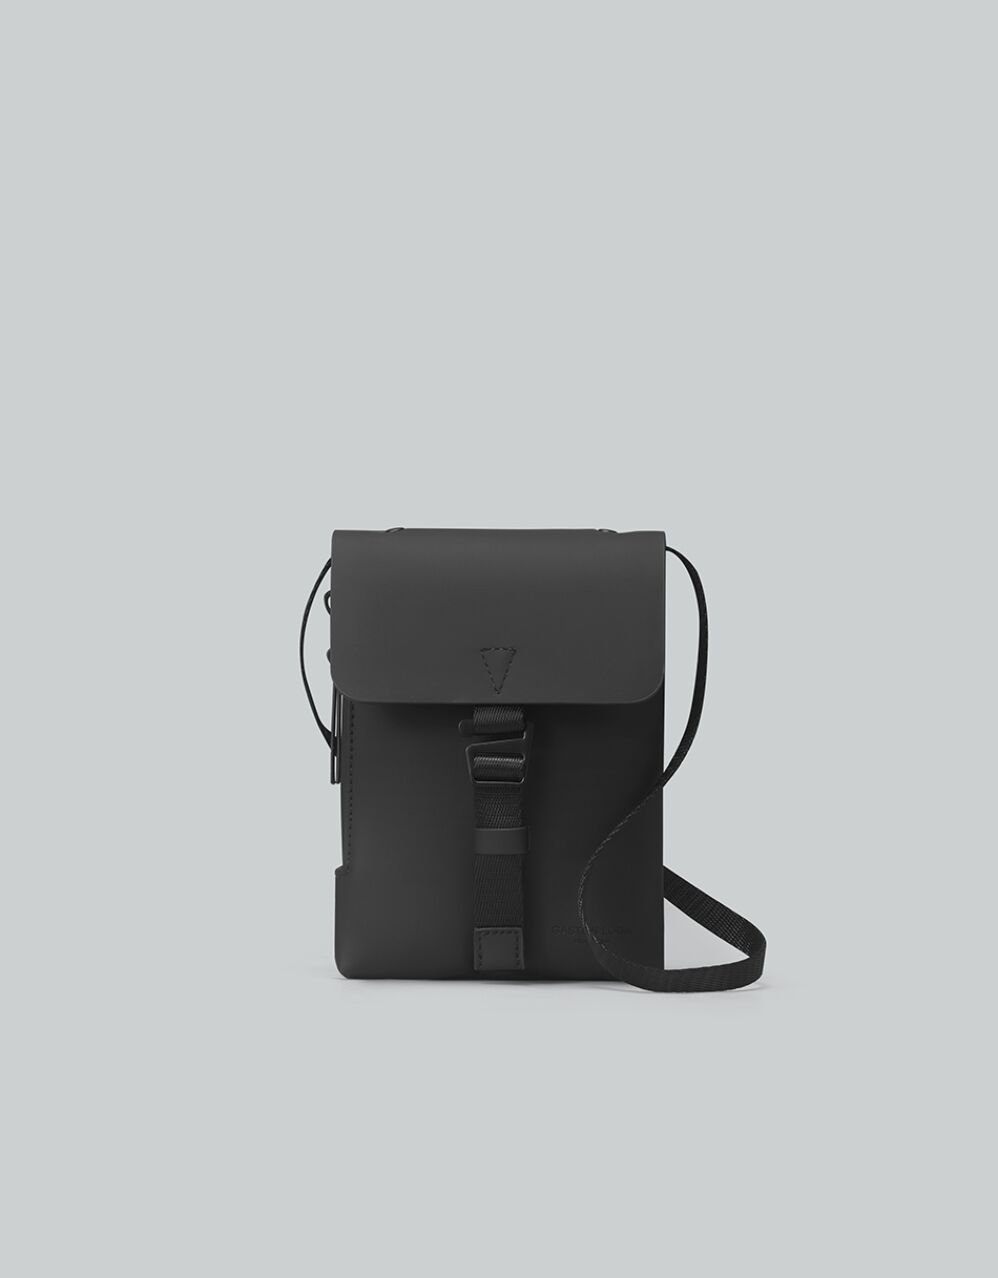 Spläsh Mini crossbody bag - Waterproof, sustainable, chic crossbody bag